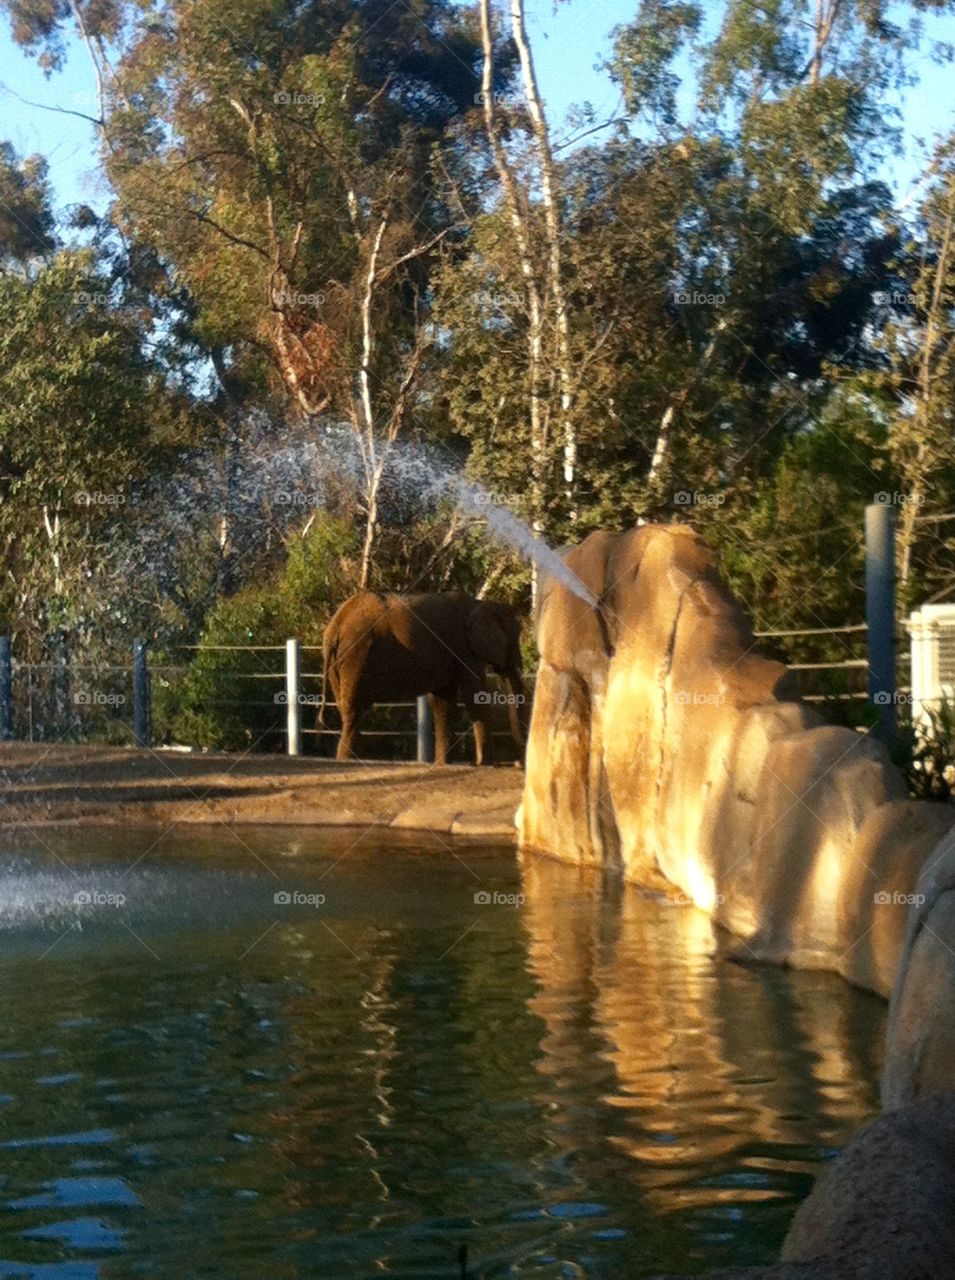 Elephant habitat at the San Diego zoo